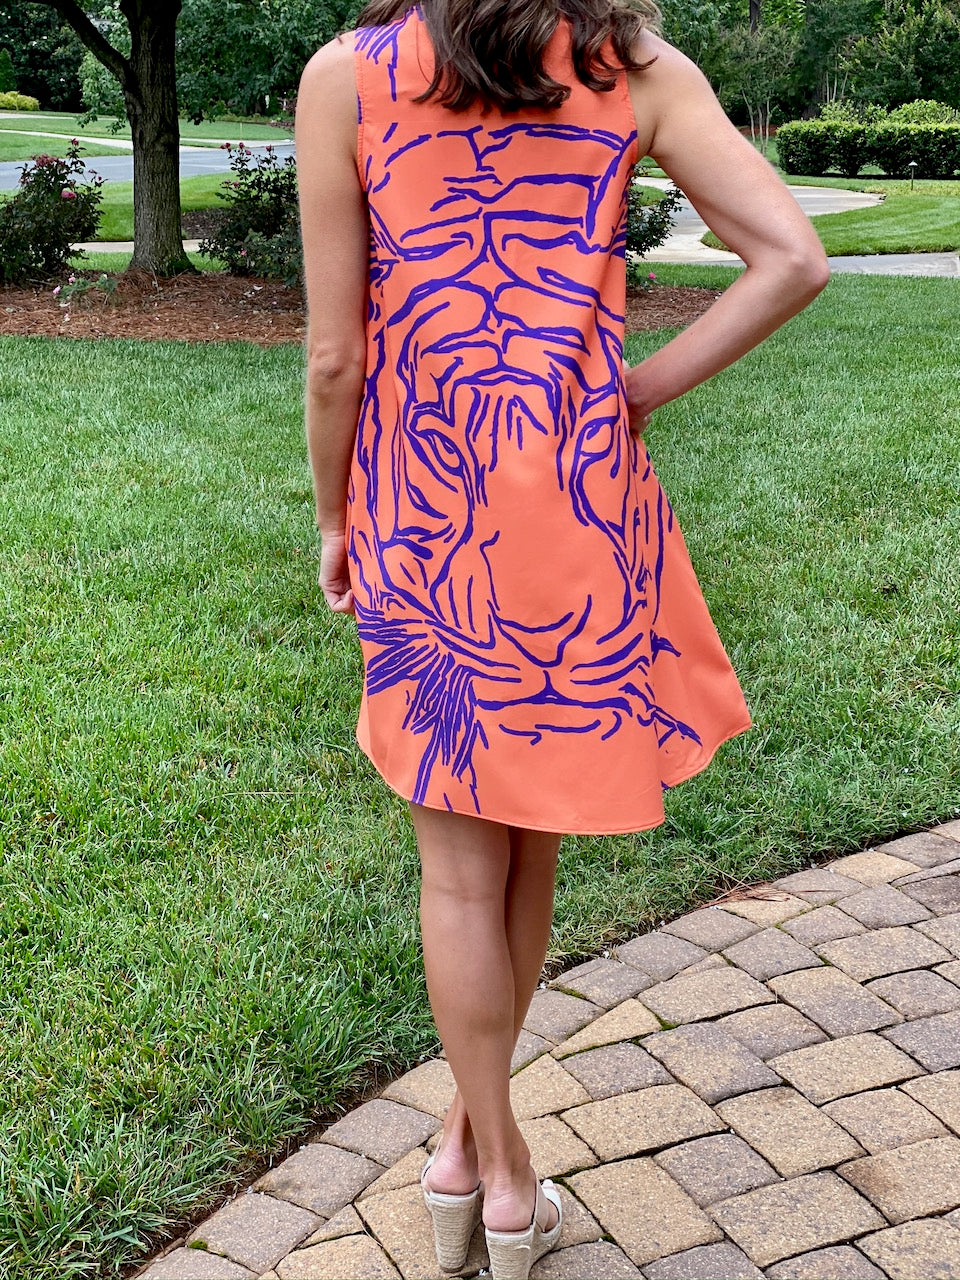 Game-Day Purple & Orange Tiger Dress